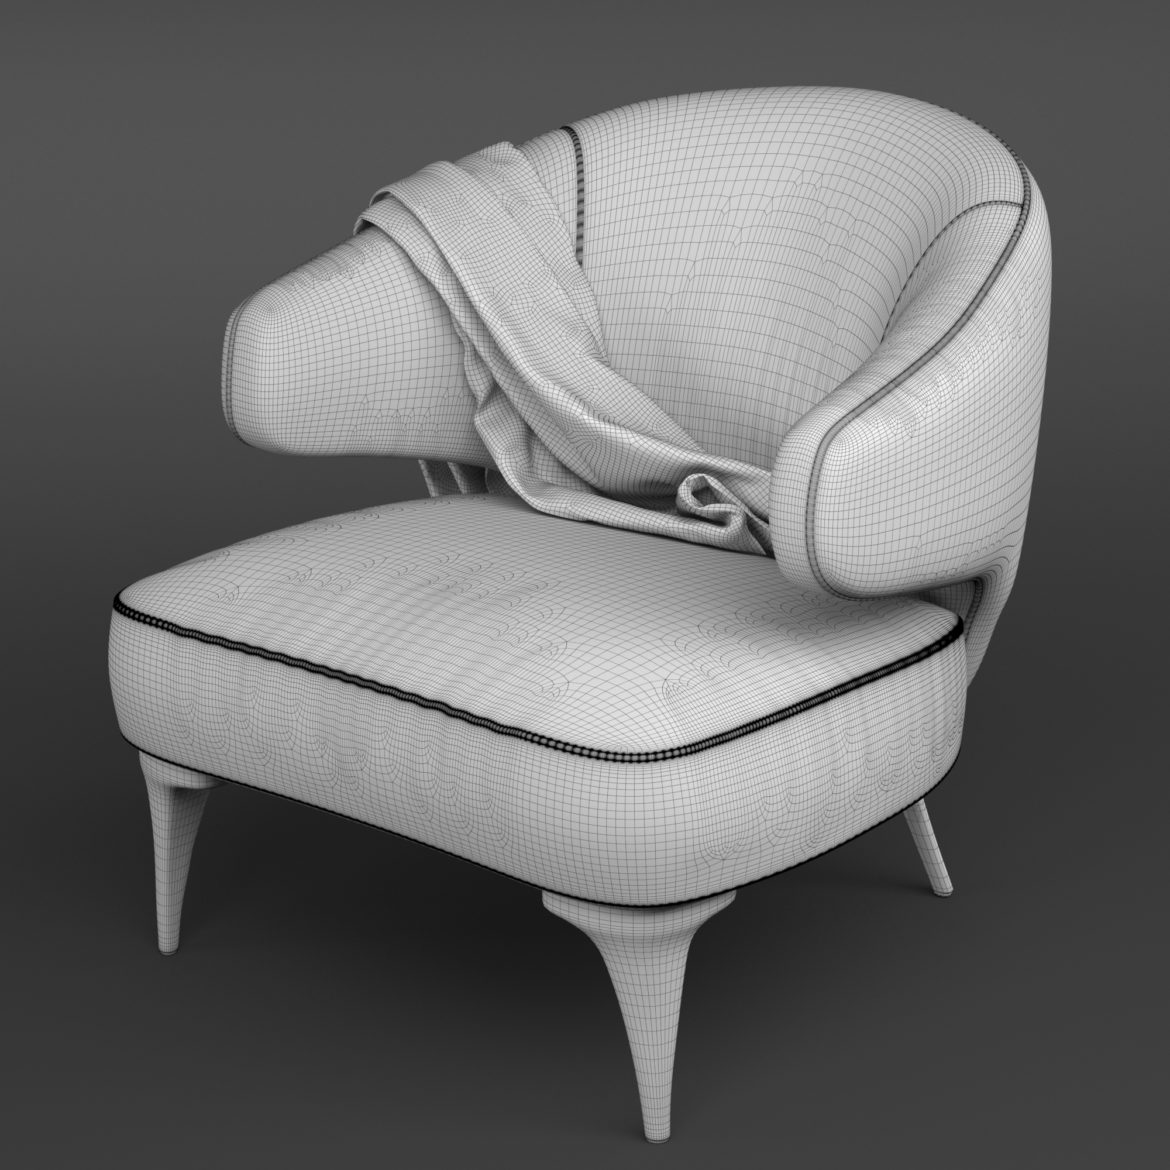  <a class="continue" href="https://www.flatpyramid.com/3d-models/furniture-3d-models/old-leather-armchair/">Continue Reading<span> Old leather armchair</span></a>